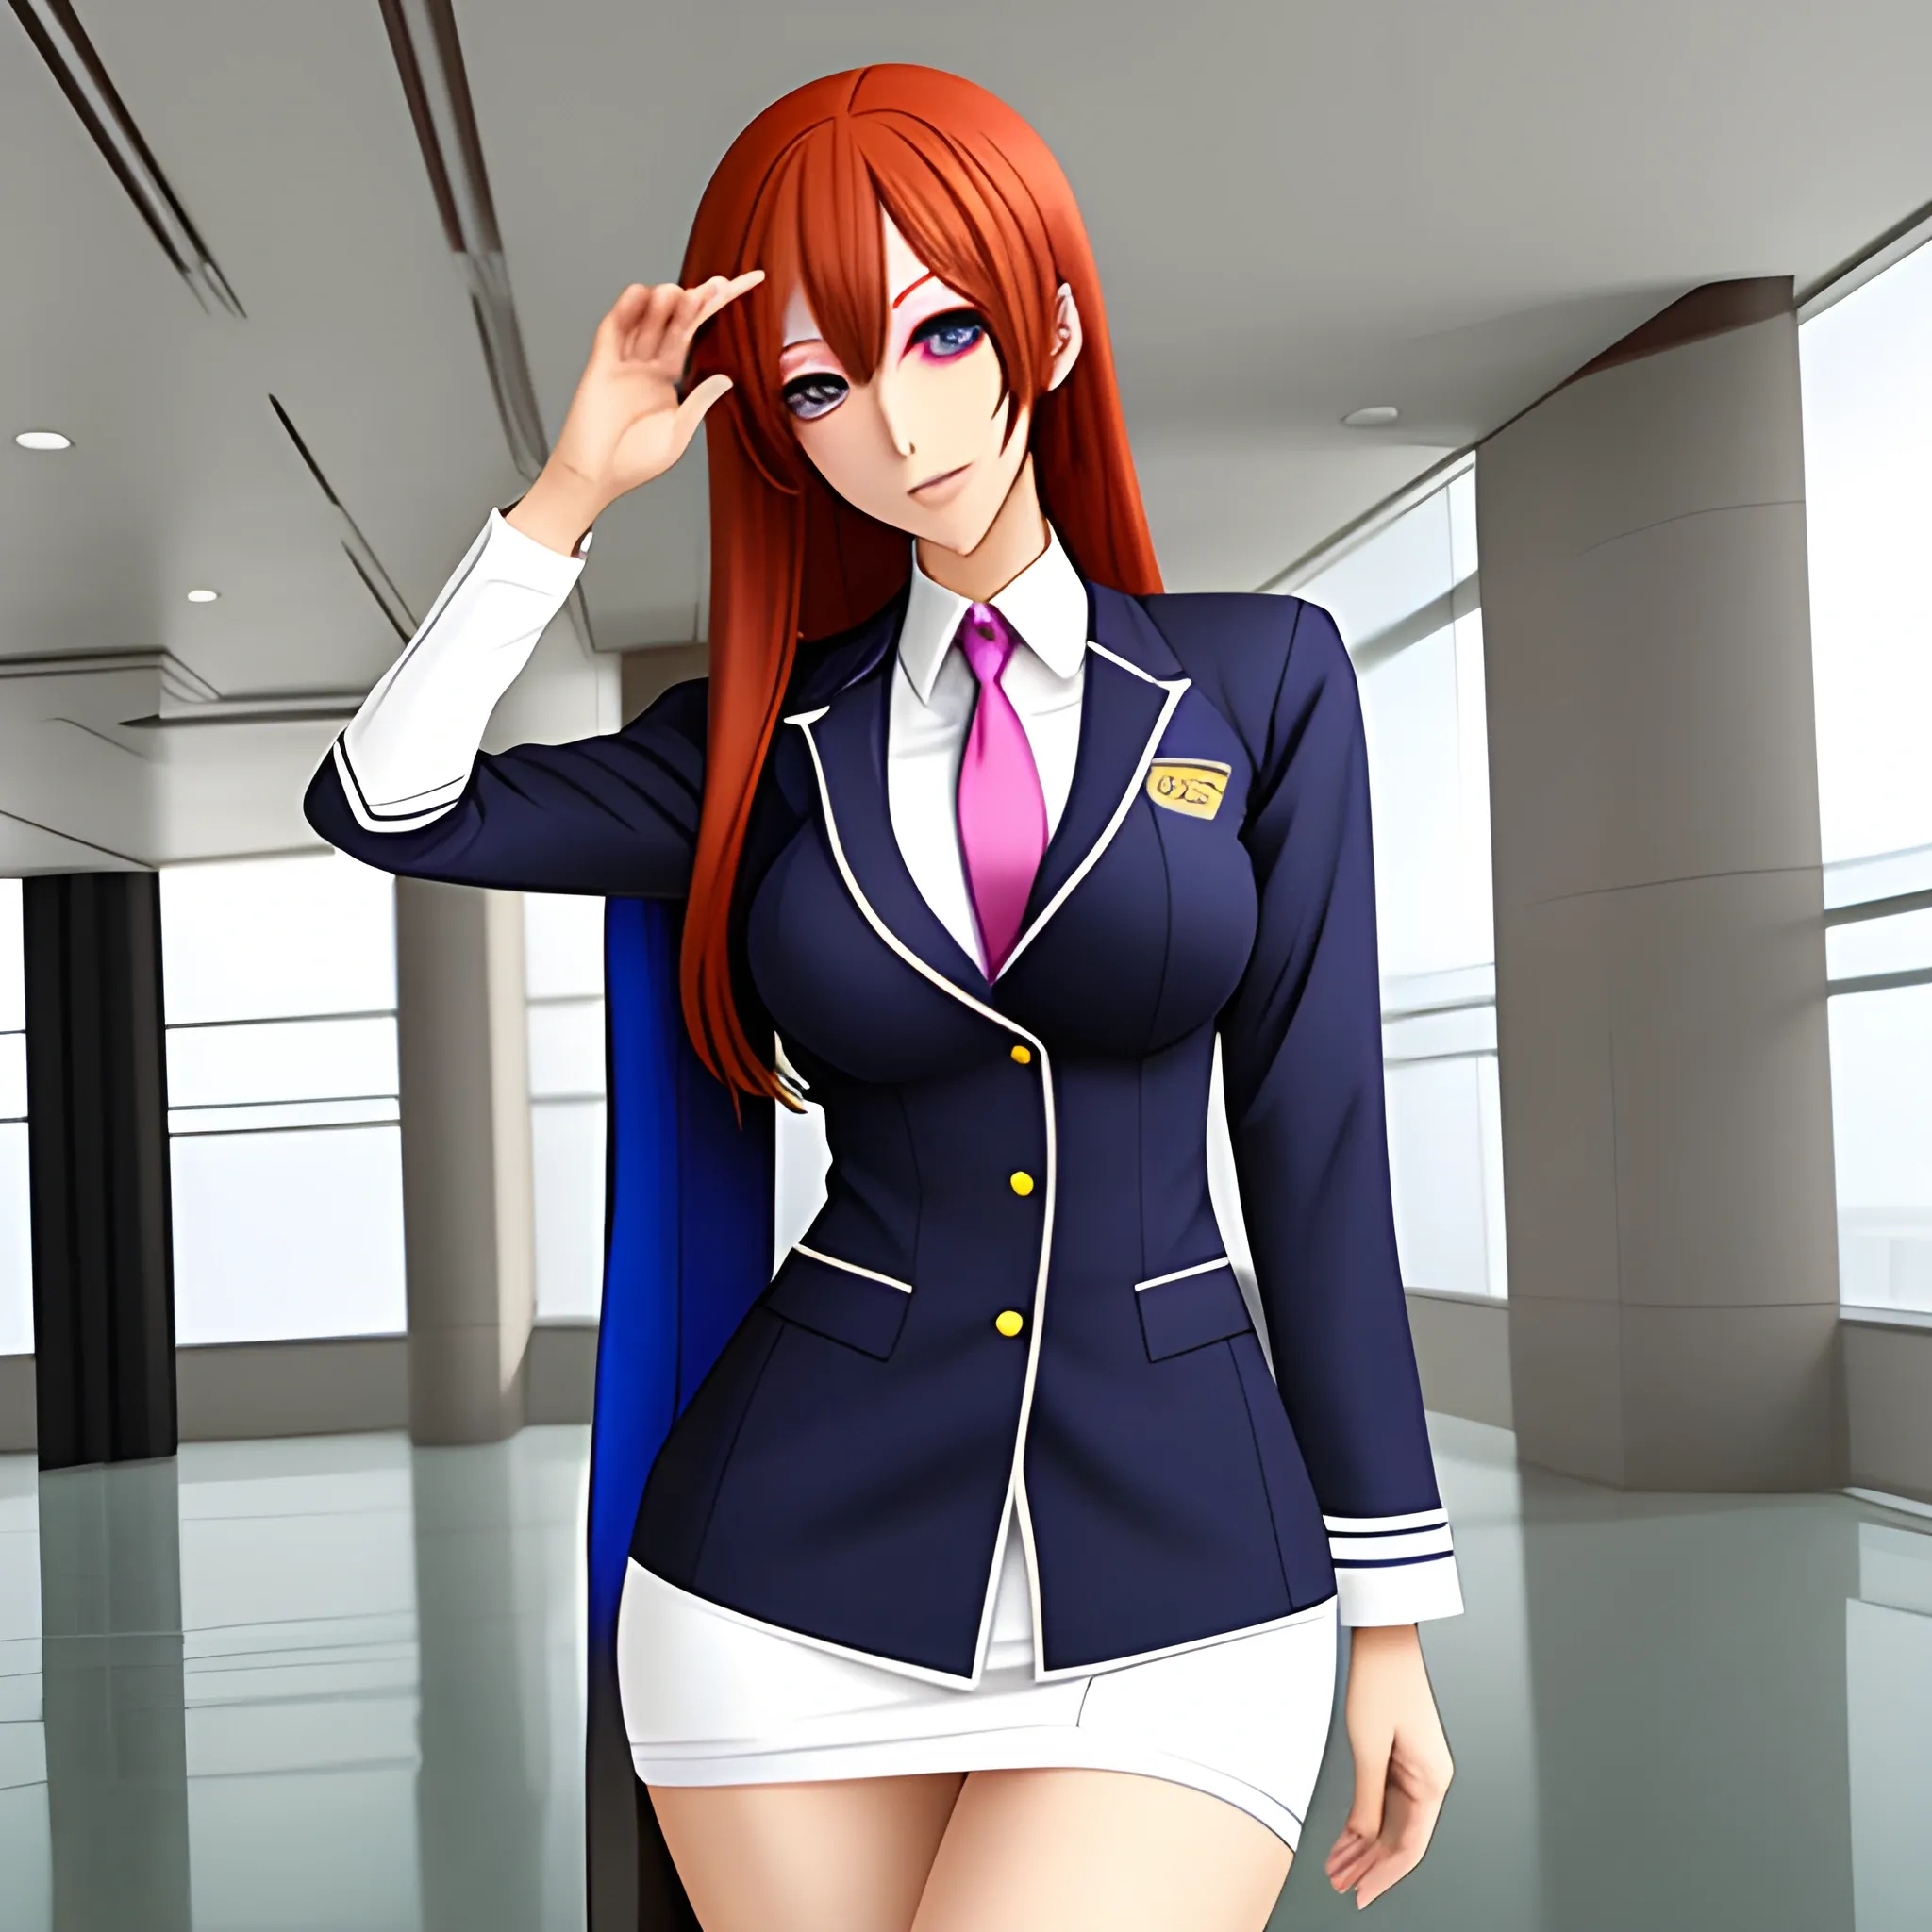 Anime girl, ultra realistic, school uniform - Arthub.ai